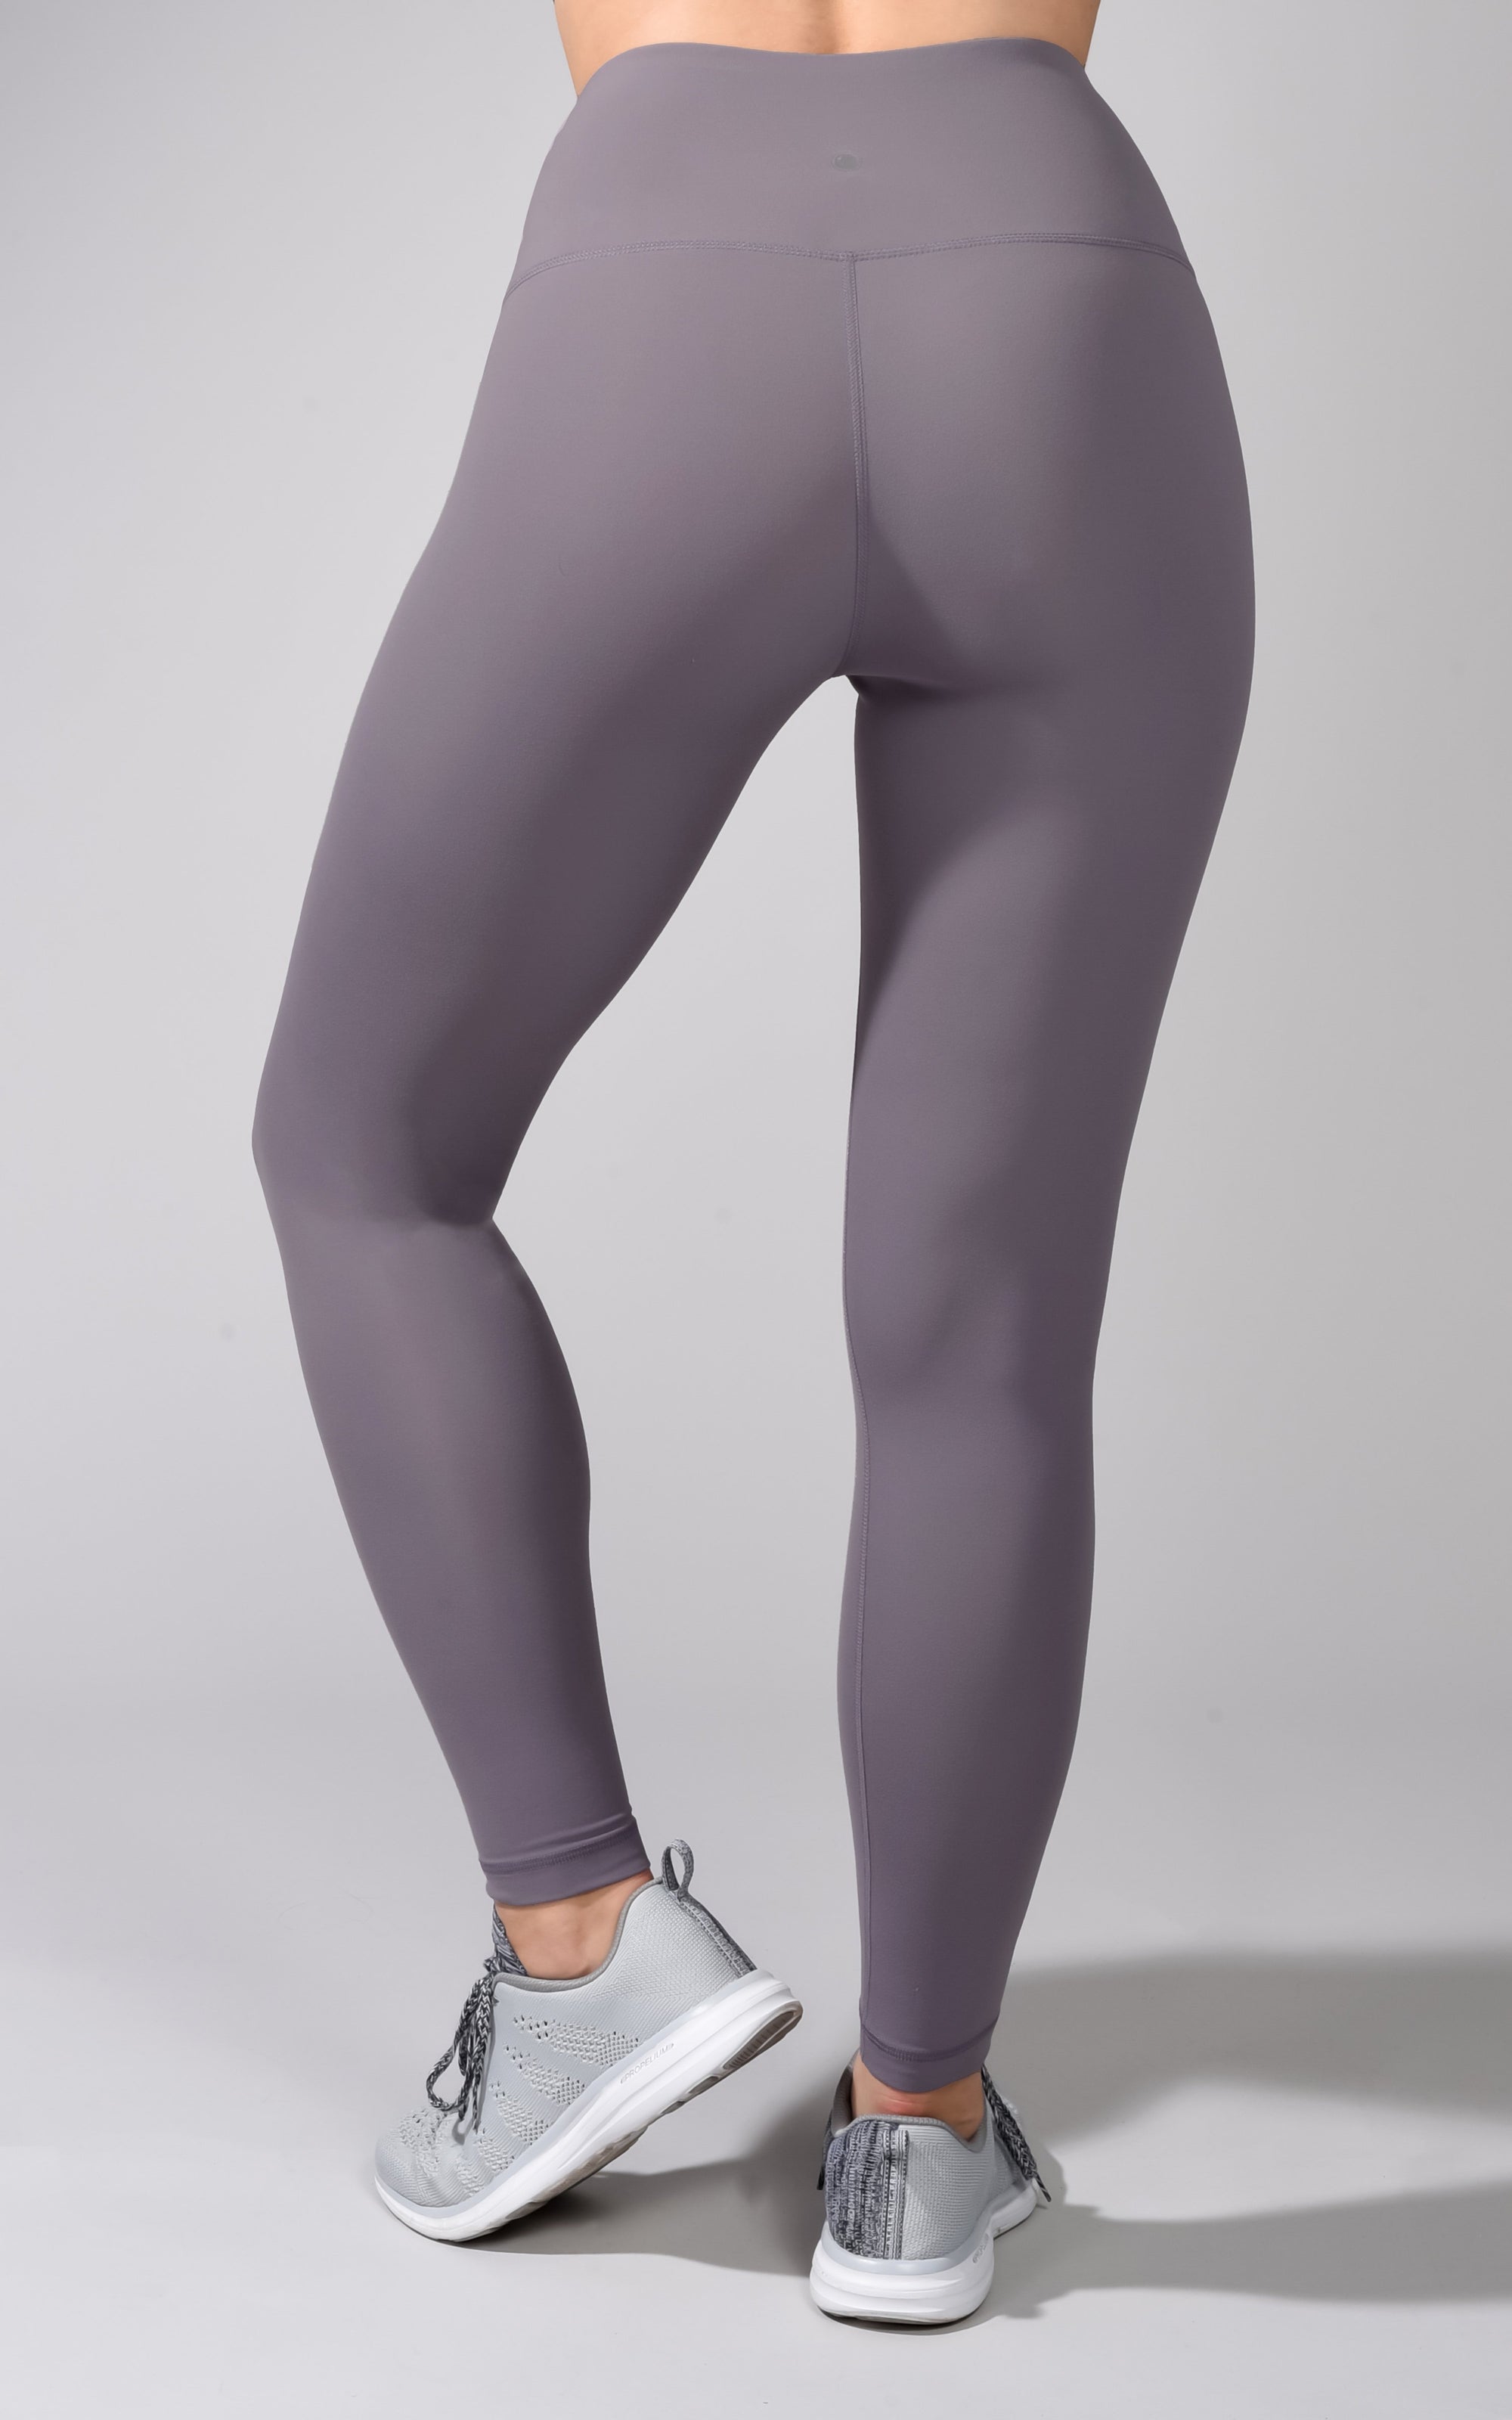 RYDCOT Women's High Waist Solid Color Tight Fitness Yoga Pants Nude Hidden  Yoga Pants Black XS 